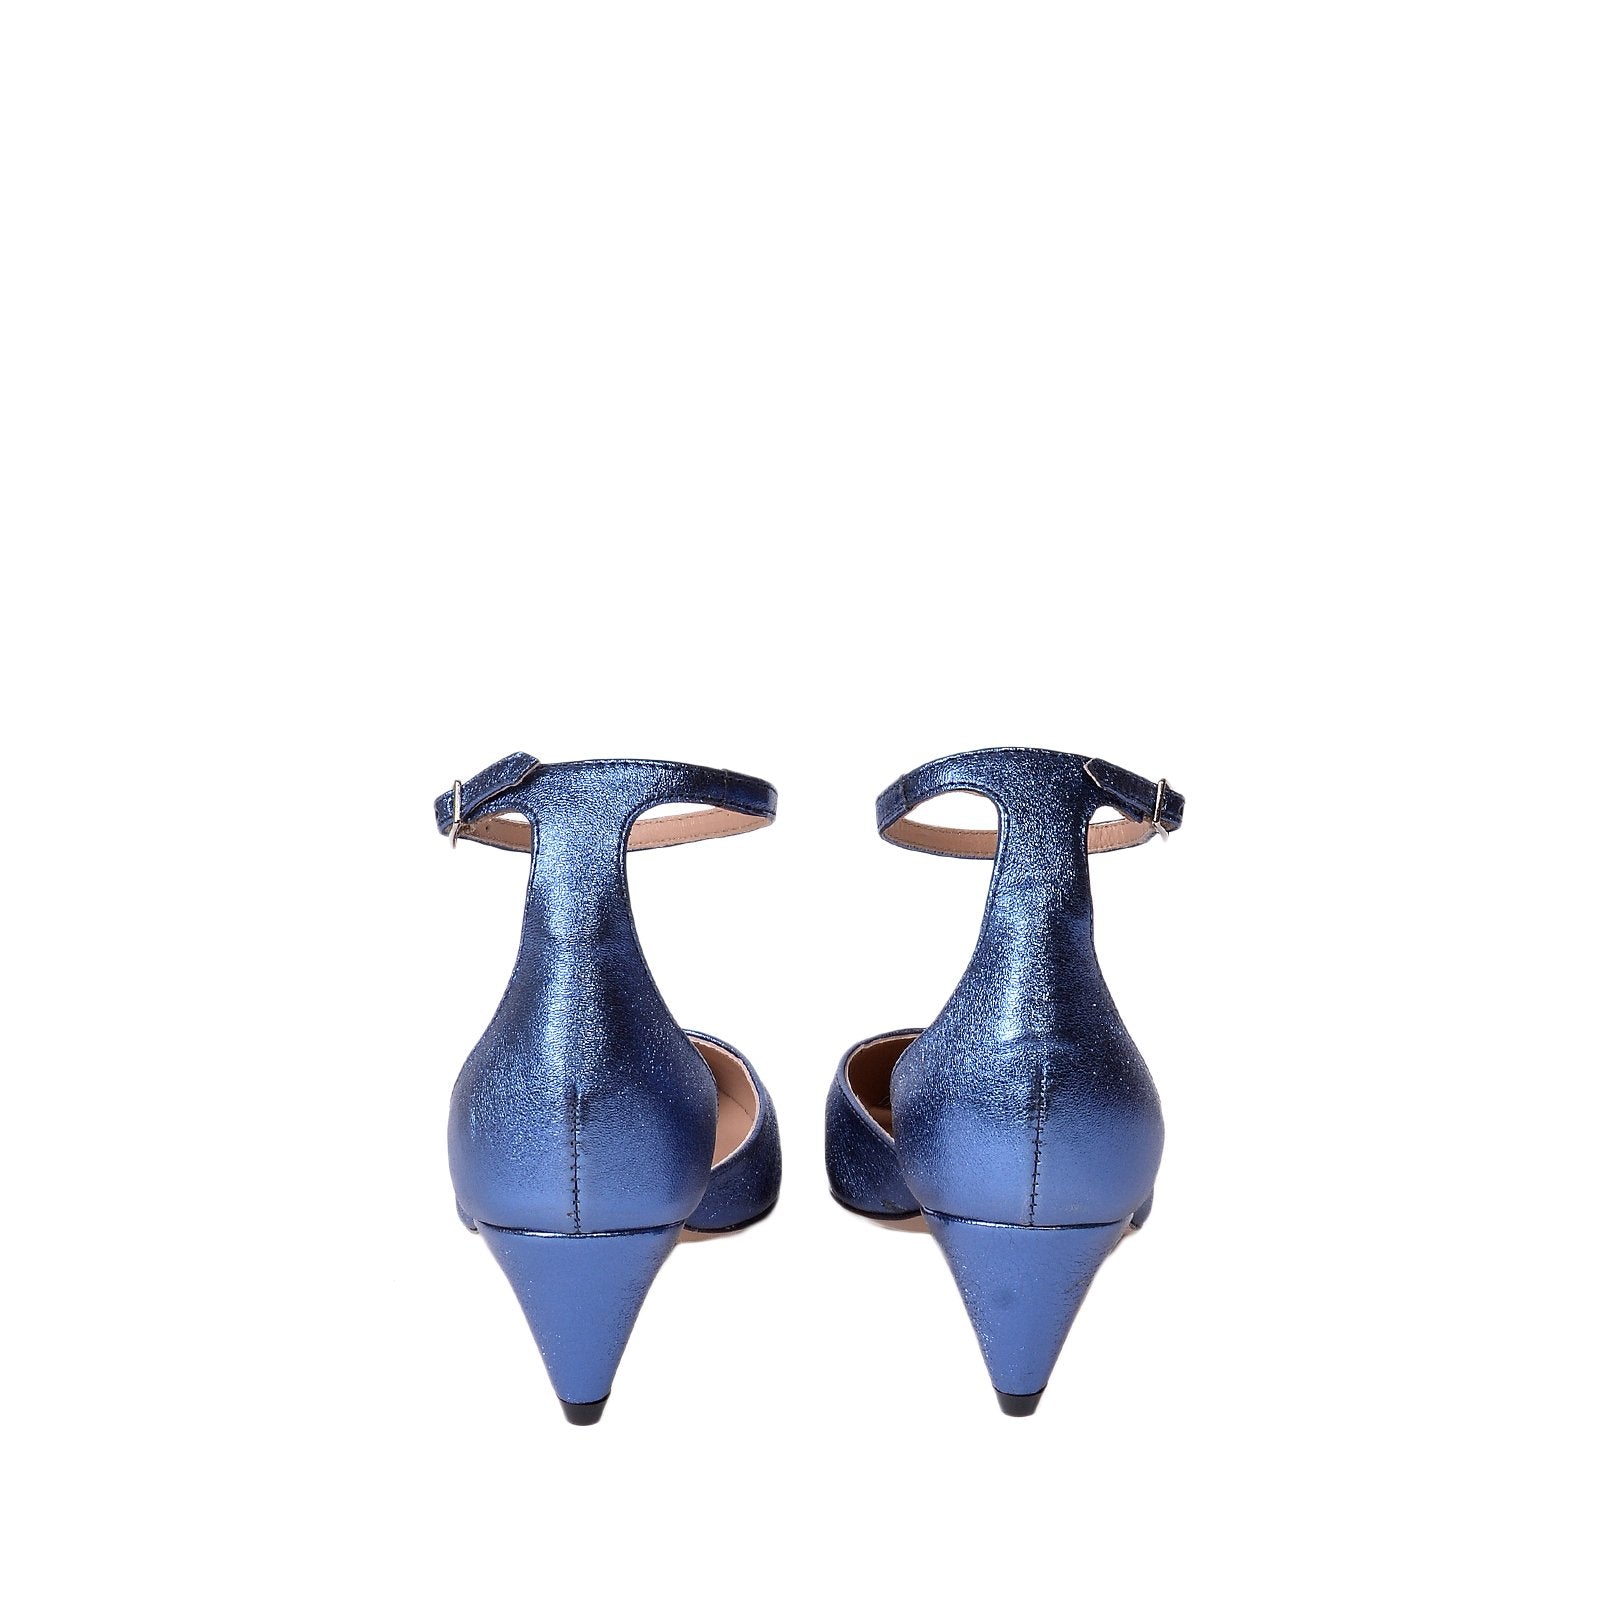 Viki Metallic Blue Leather Shoes Heels 790-008-1 - 4